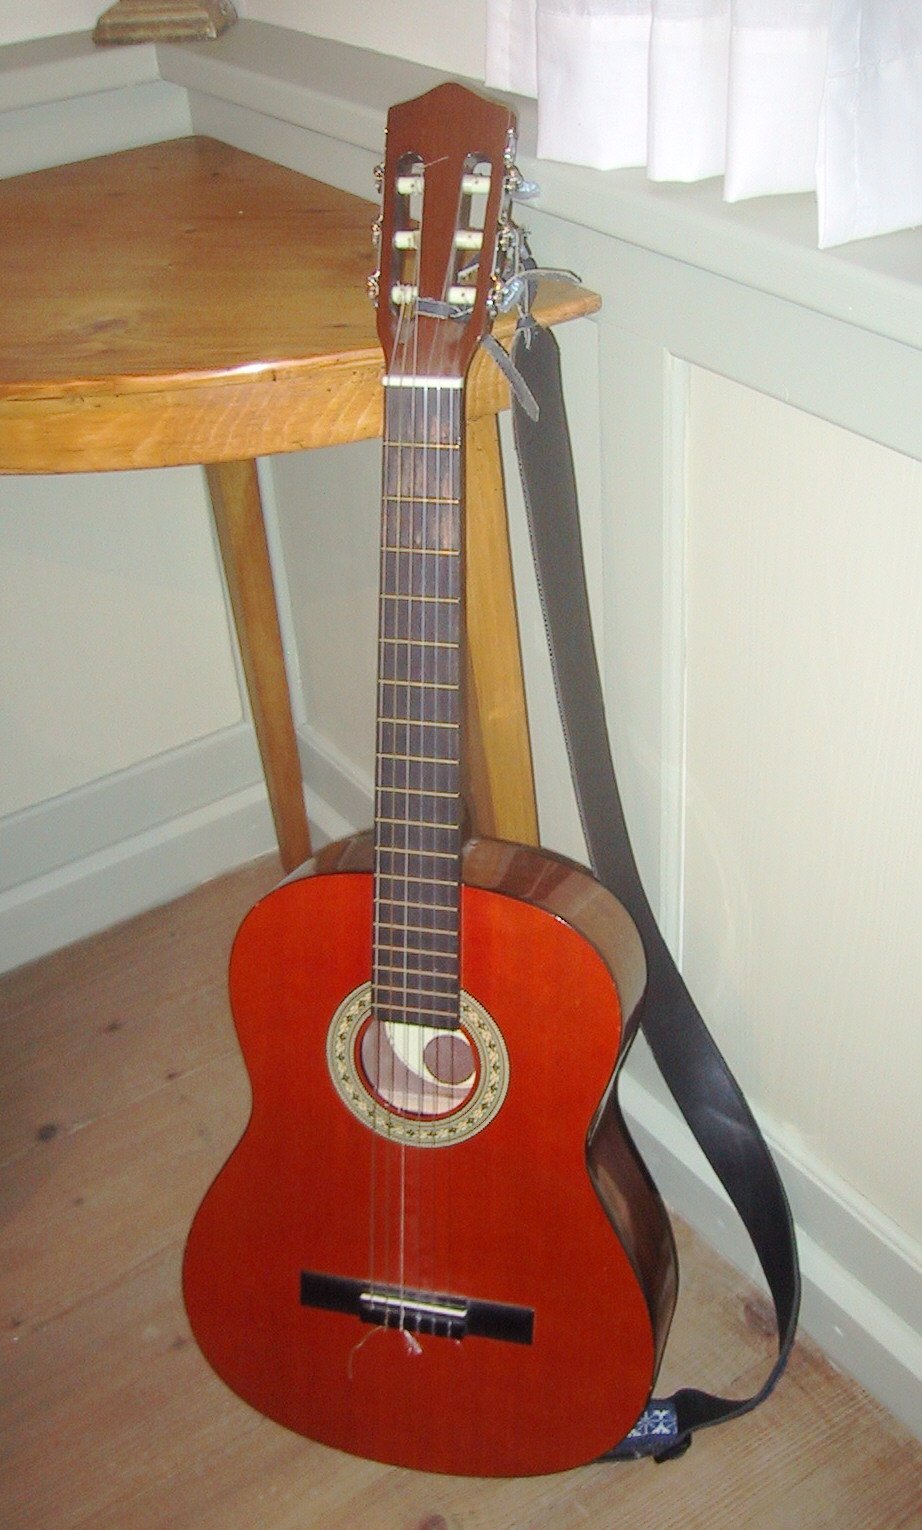 MIS_0119 Gitarre (Geschichts- und Heimatverein Eglofs e.V. CC BY-NC-SA)